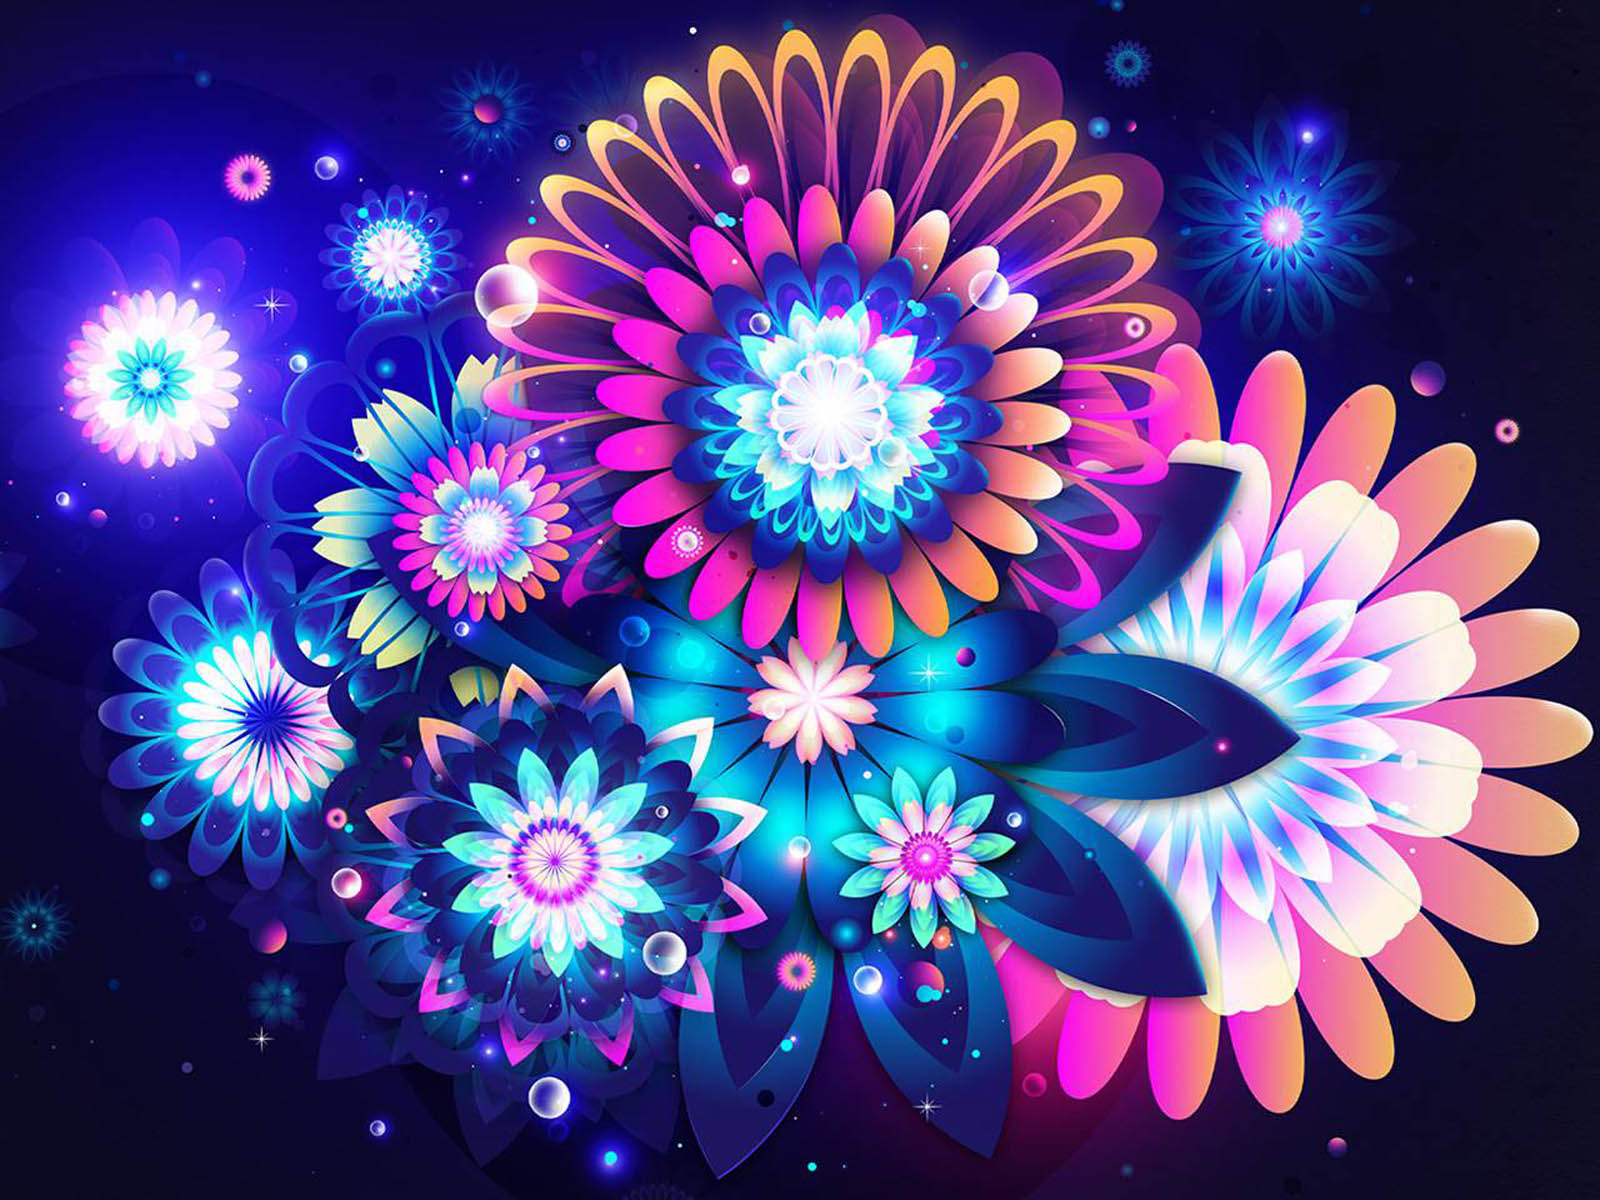 Abstract Digital Flowers Art Wallpaper Graphic